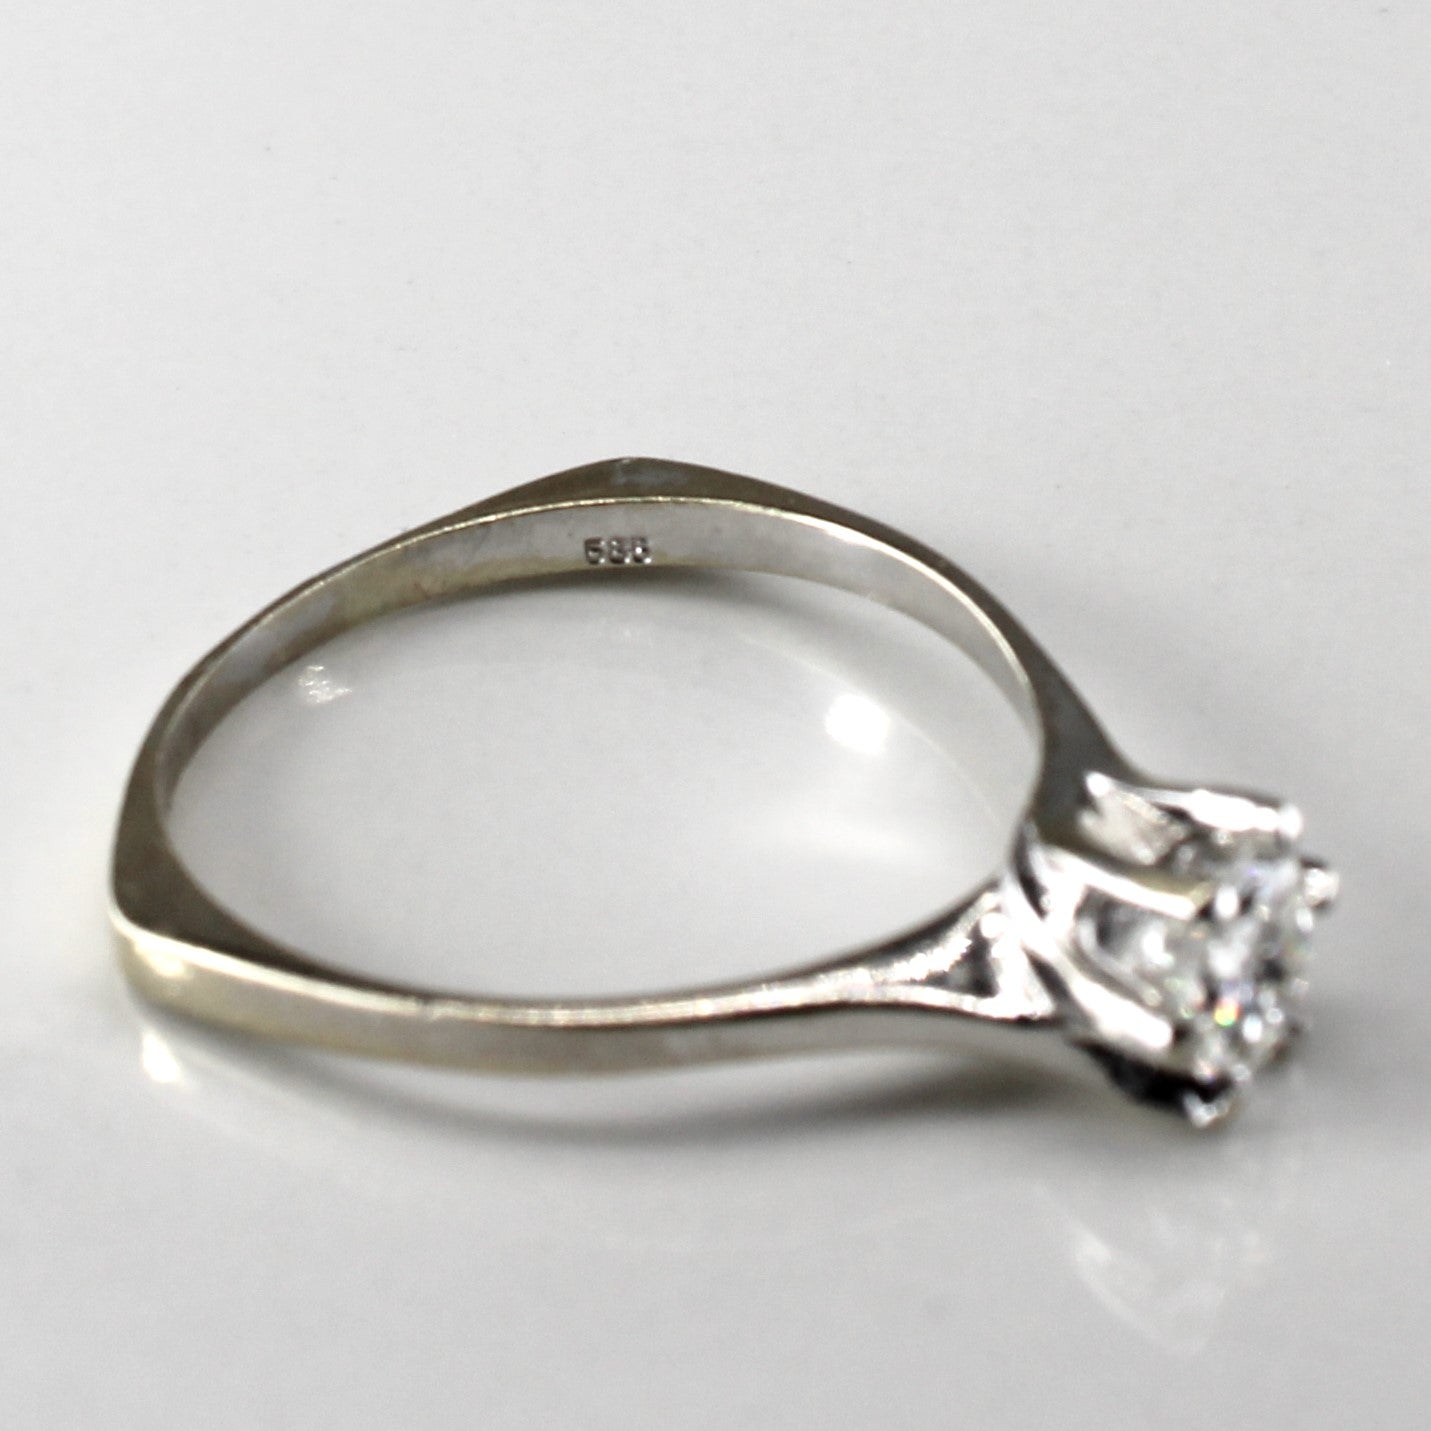 Solitaire Diamond 14k Engagement Ring | 0.51ct | SZ 9 |